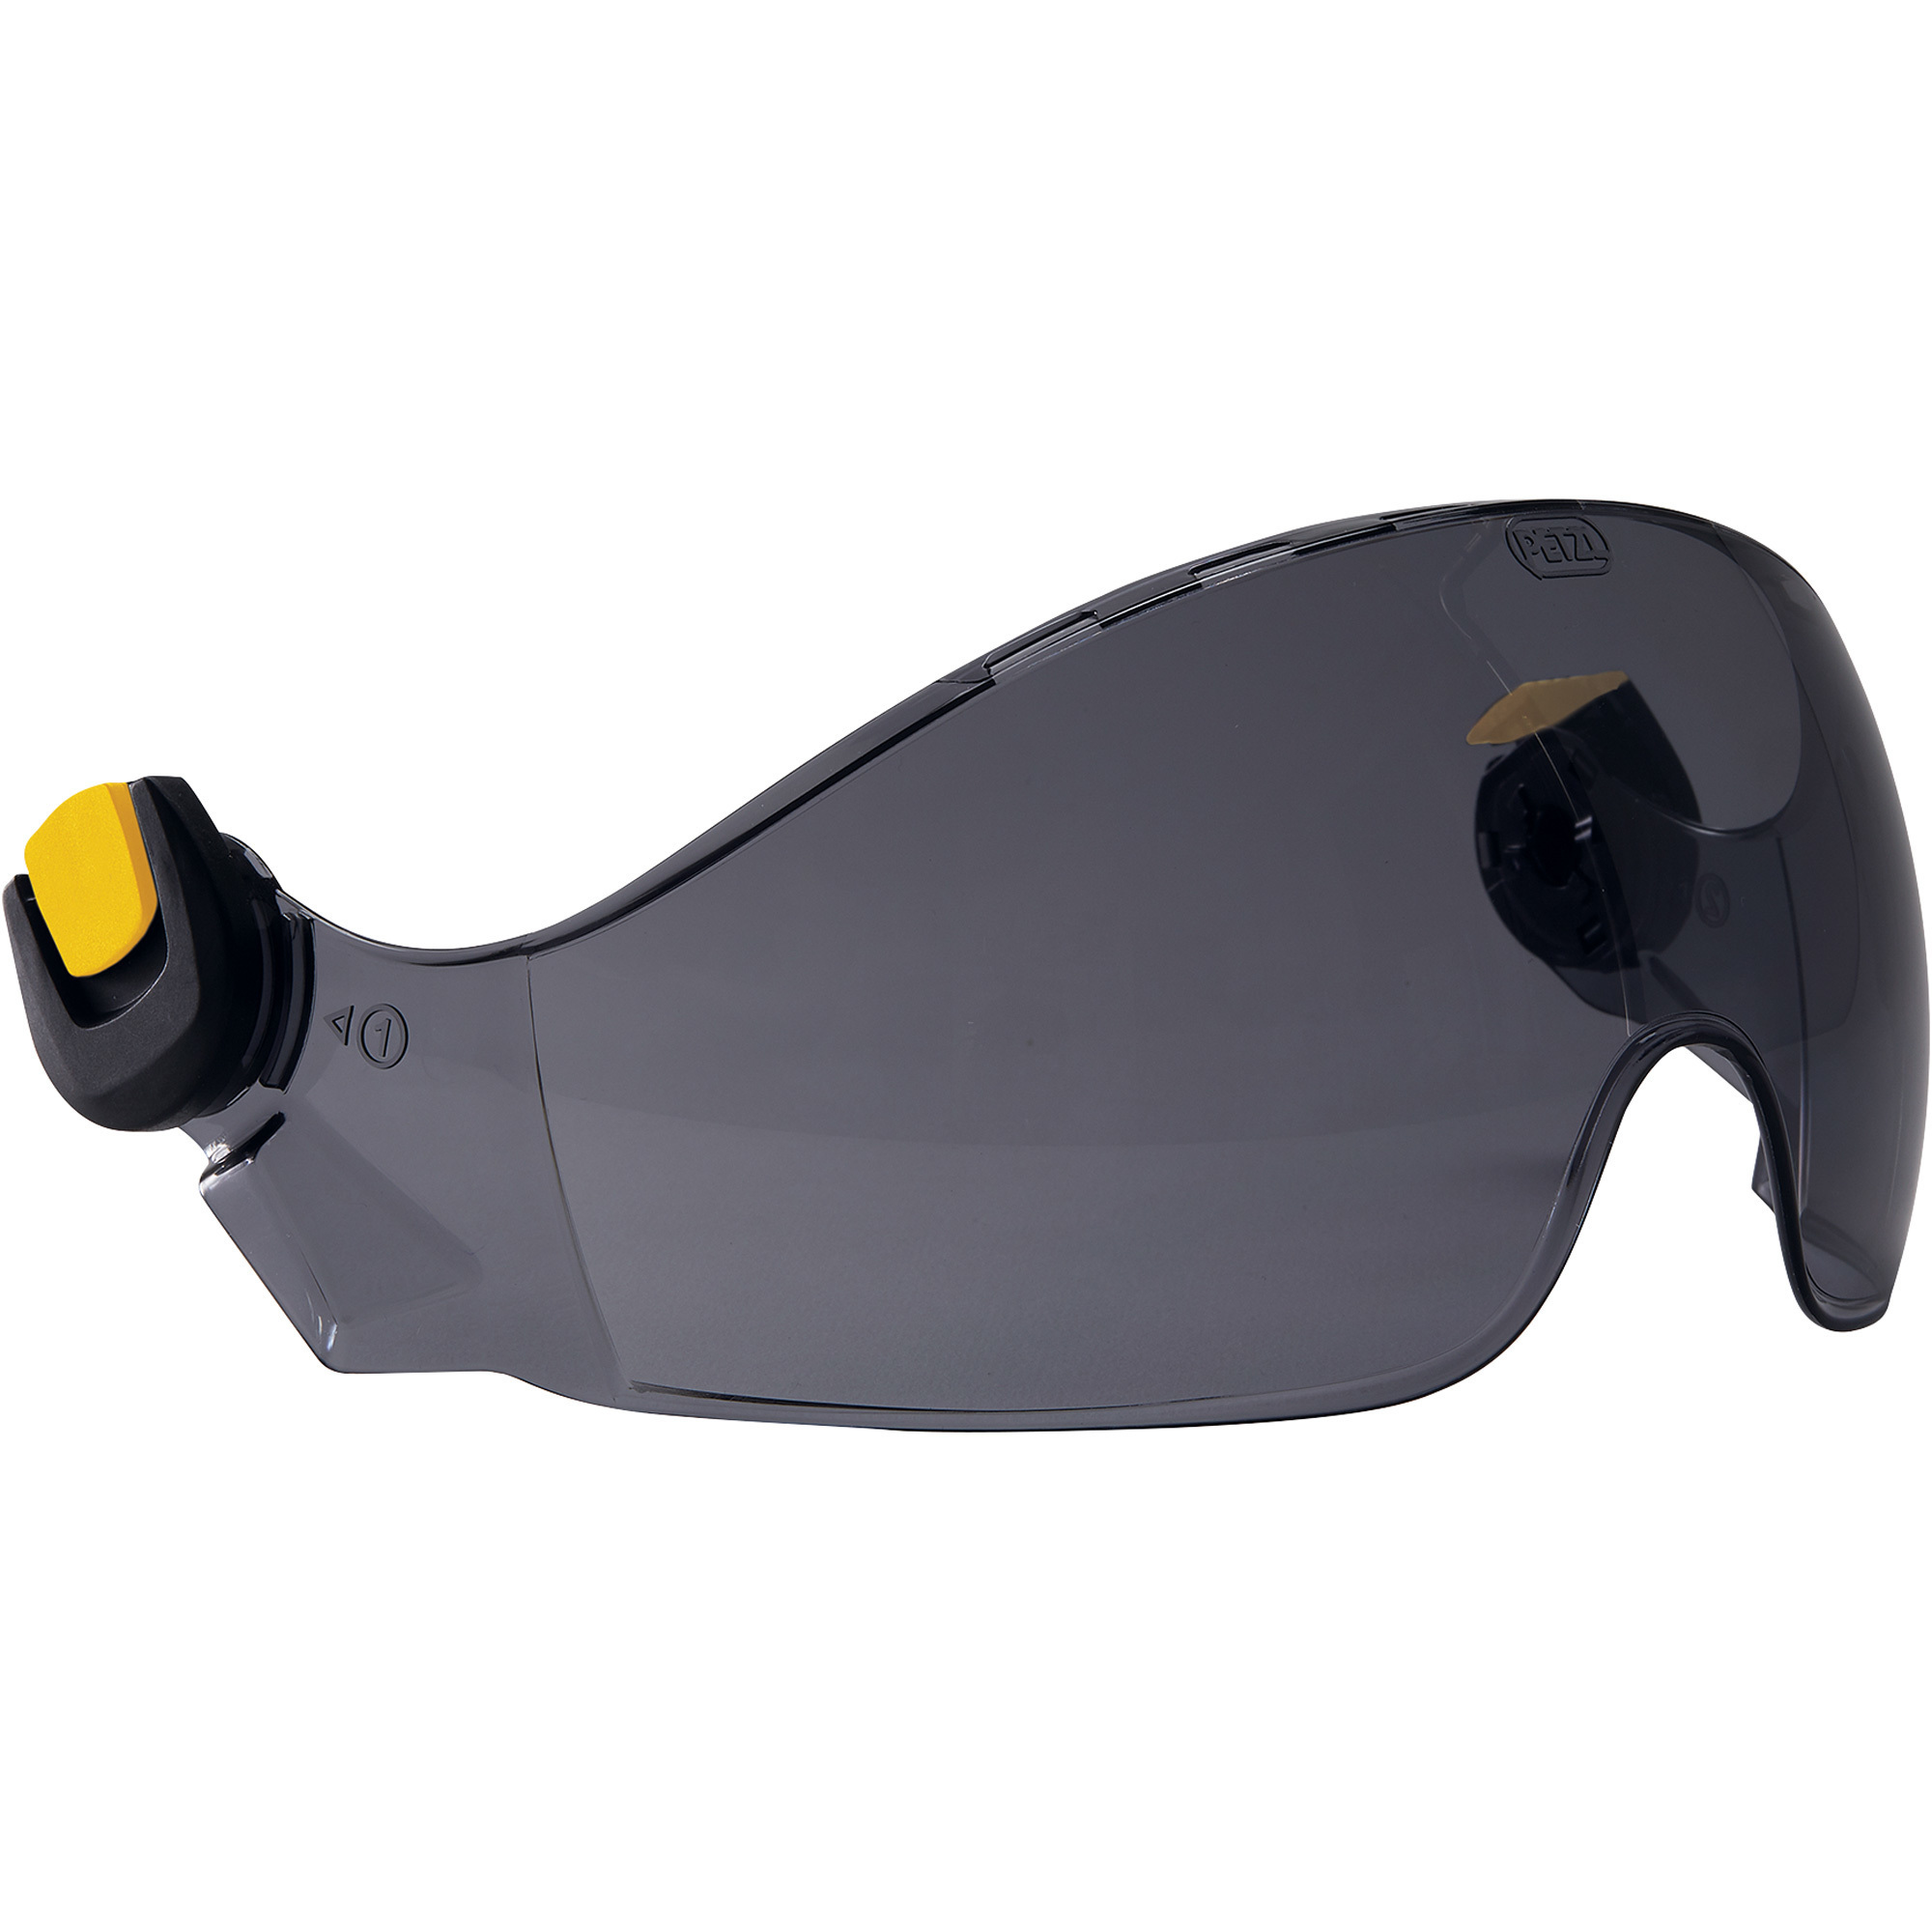 Petzl Vizir Shadow Eye Shield with Black Tint, Model A015BA00